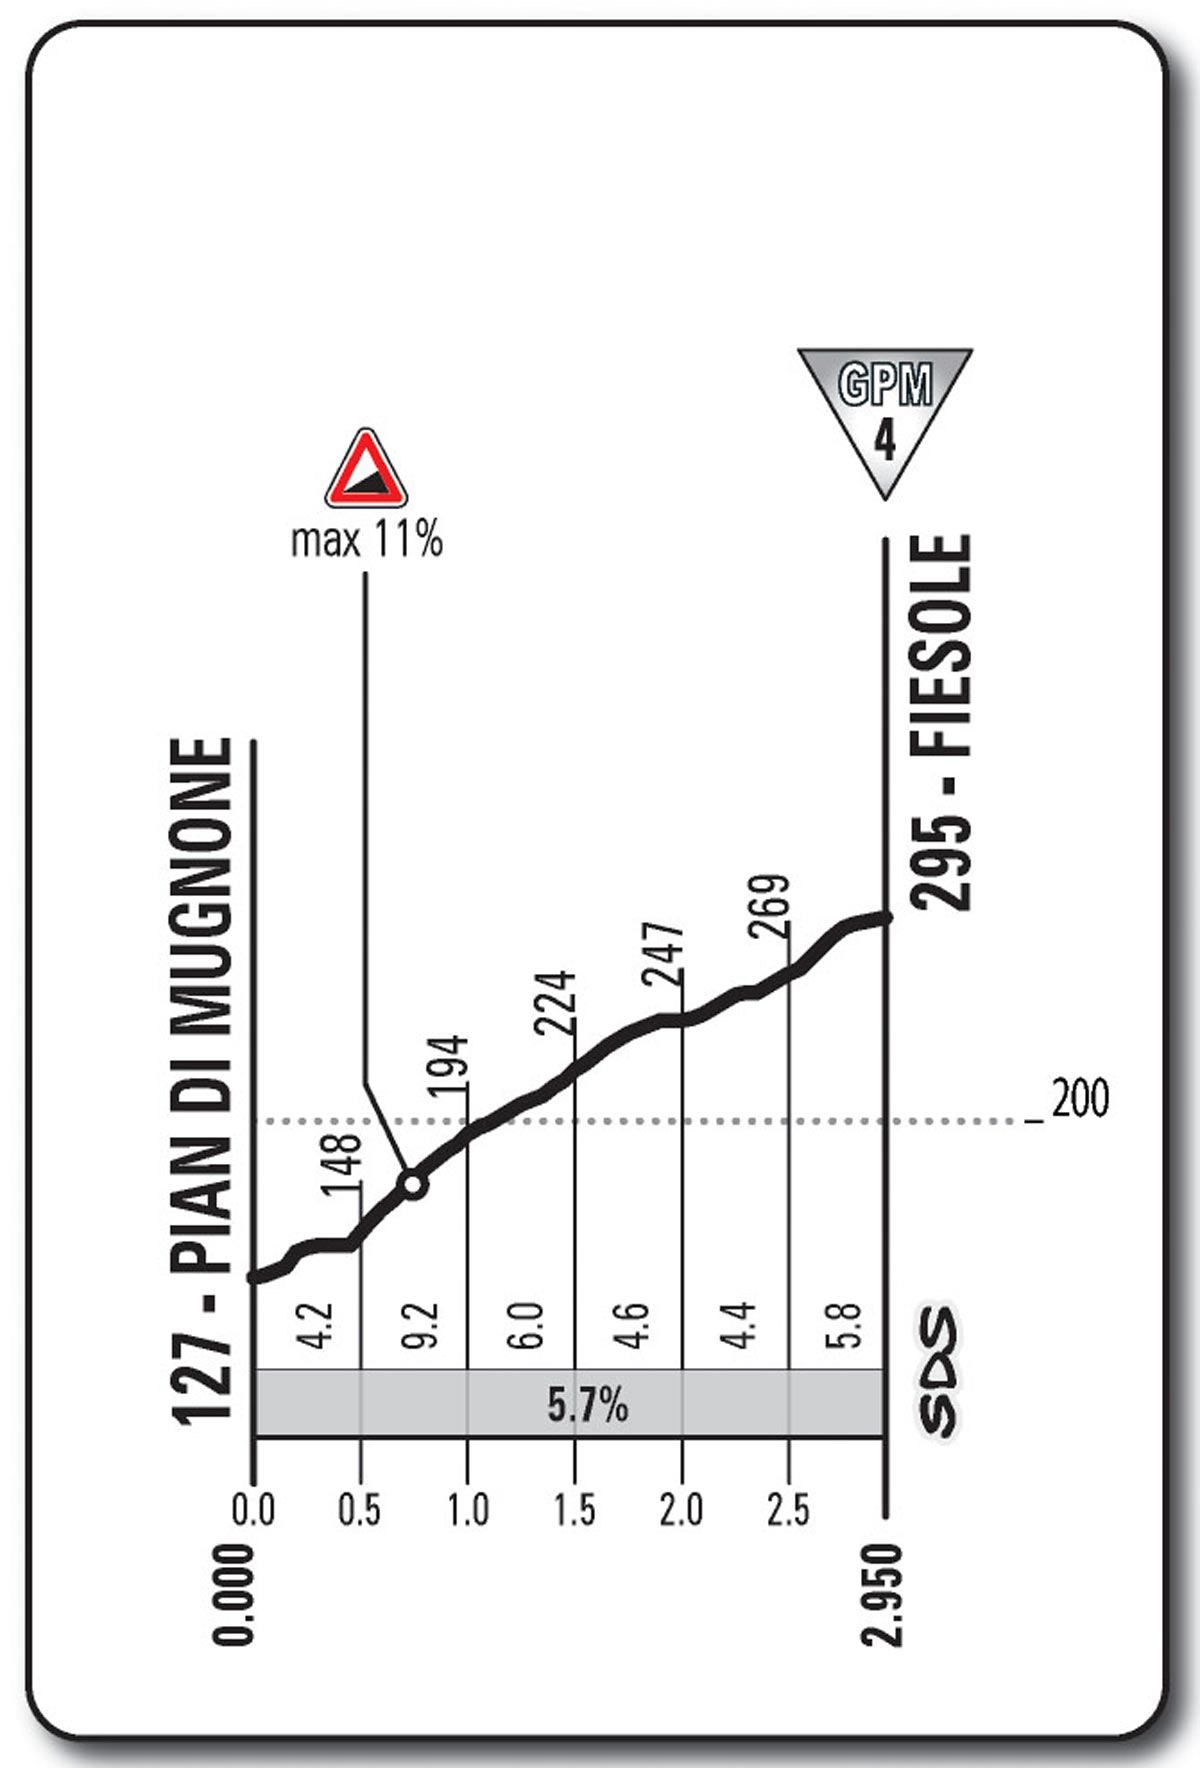 Giro d'Italia 2013 Stage 9 climb details (Fiesole)